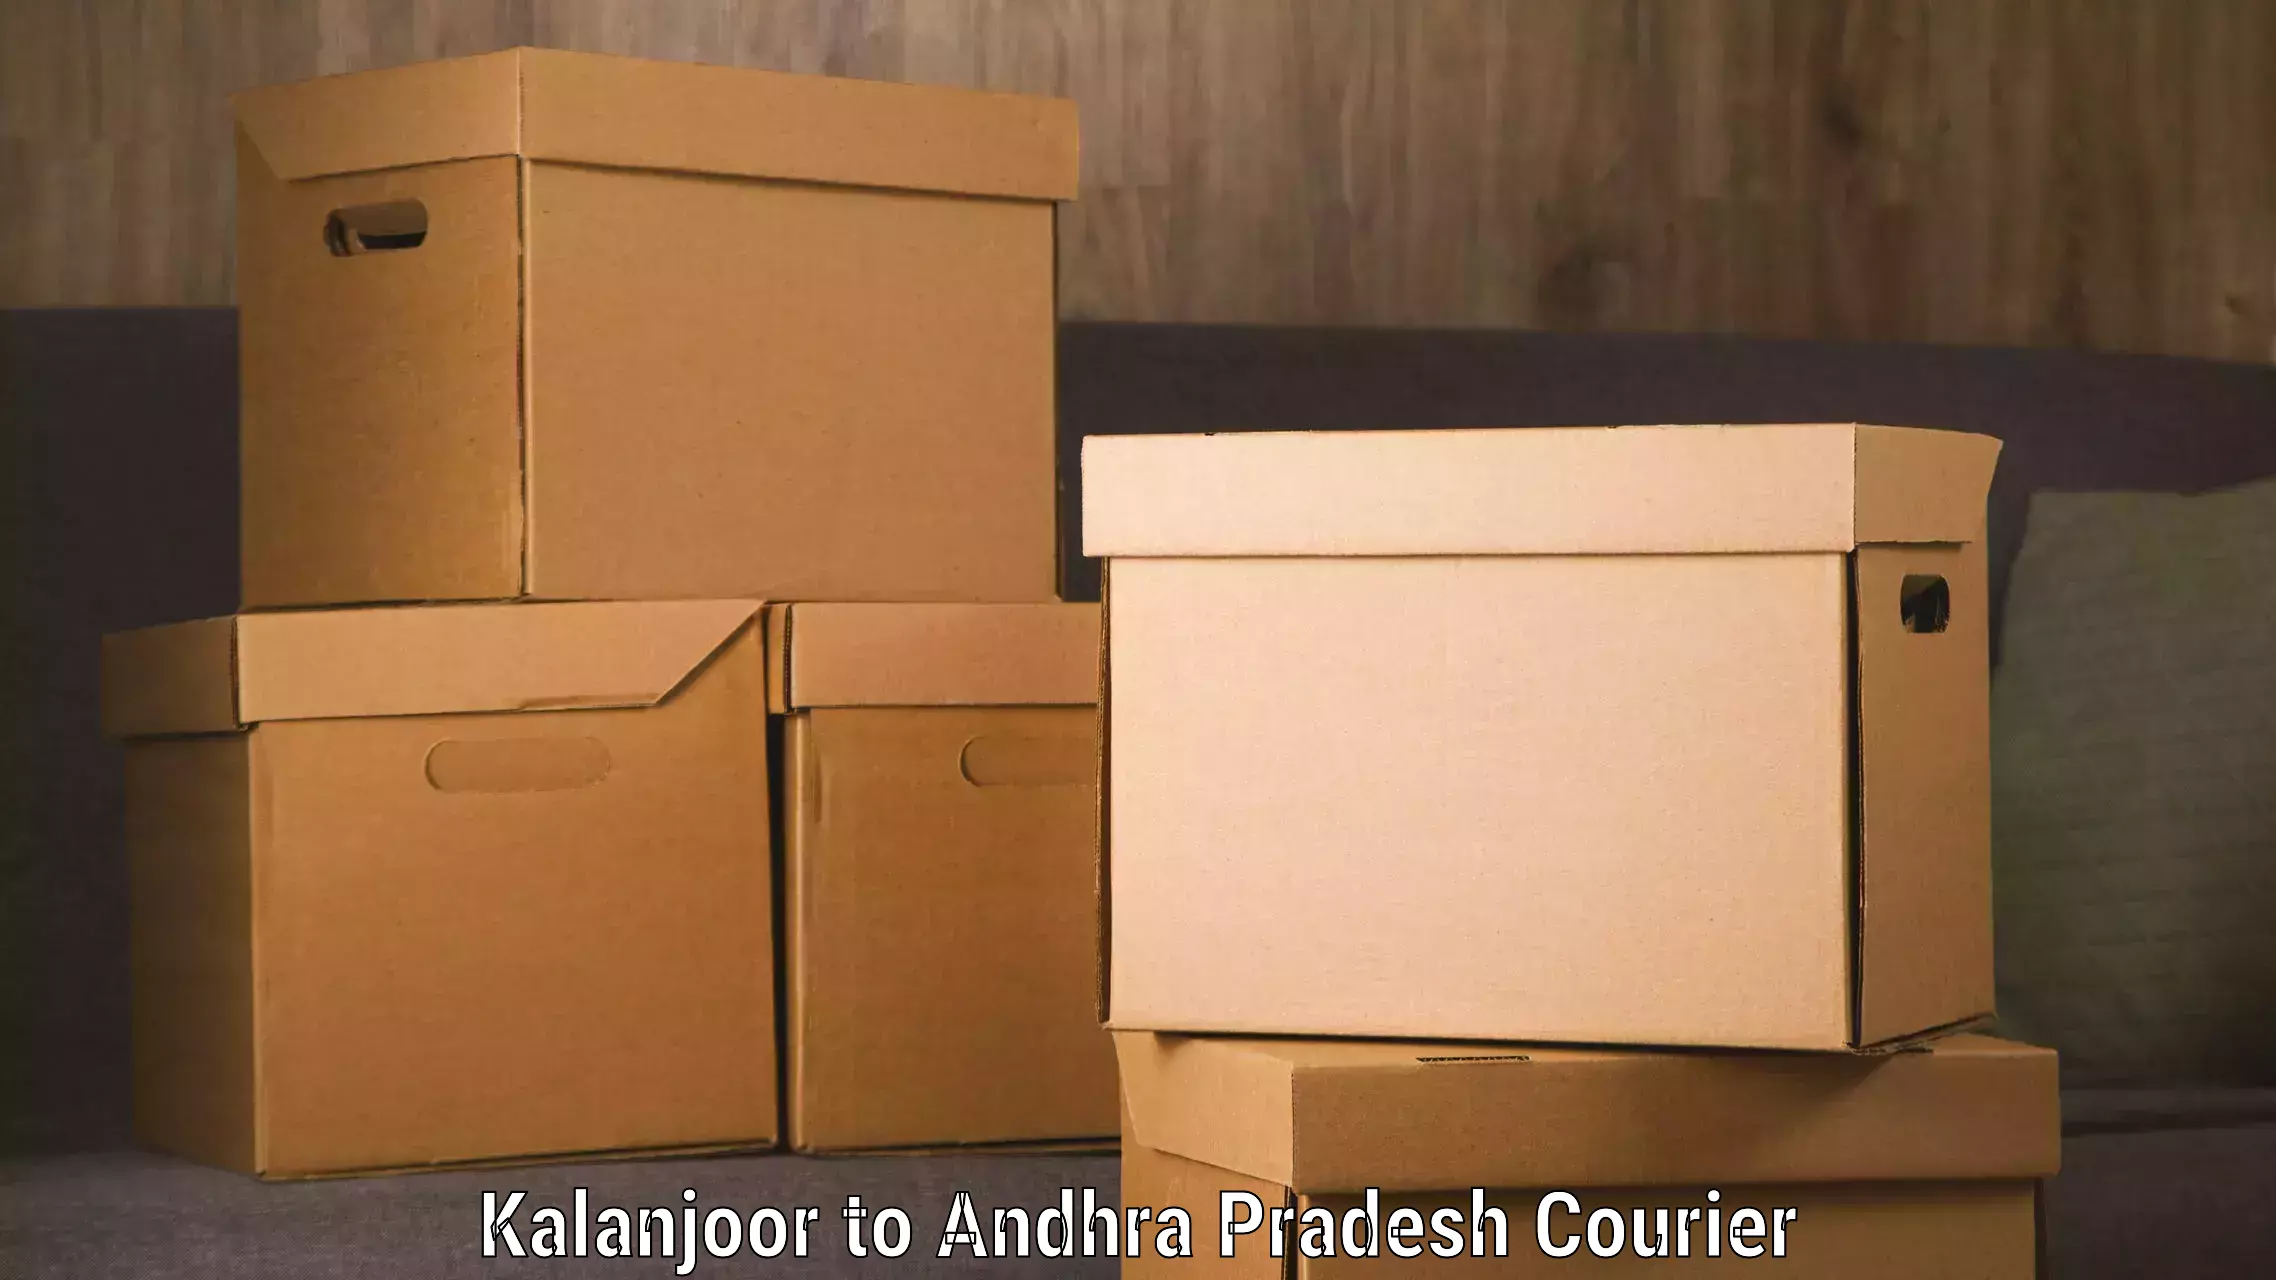 Enhanced tracking features in Kalanjoor to Kalyandurg